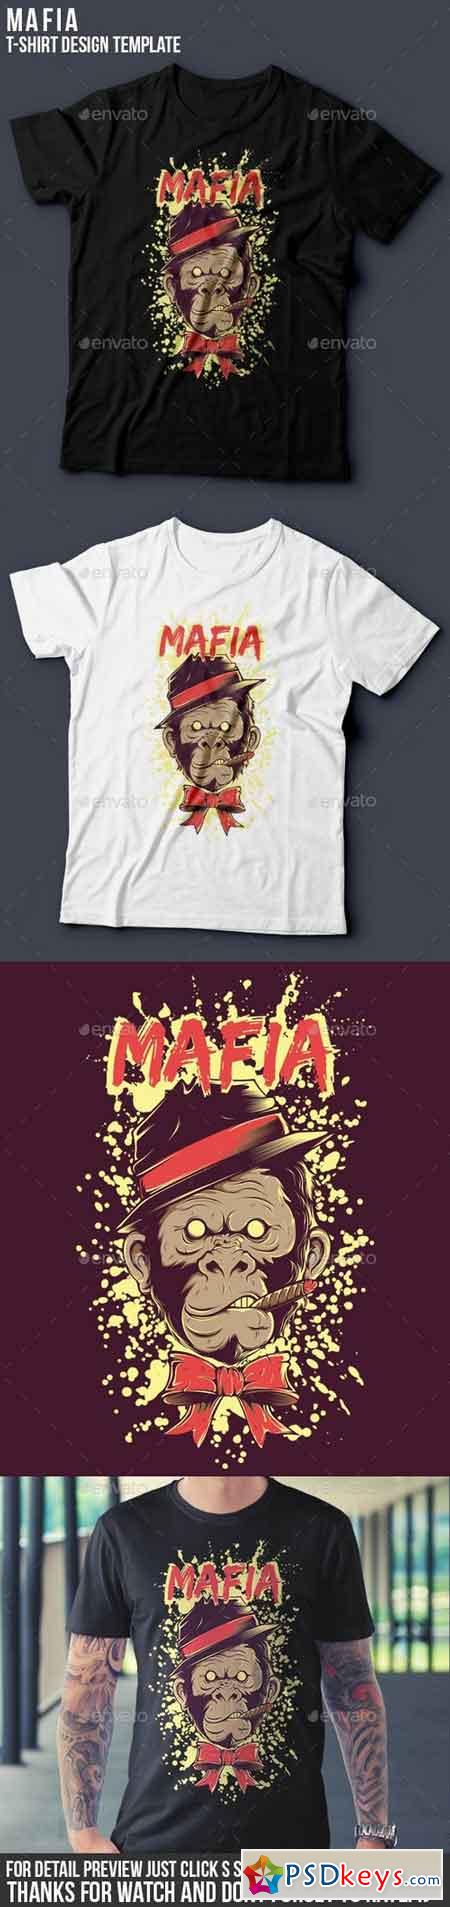 Mafia T-shirt Template 10881066